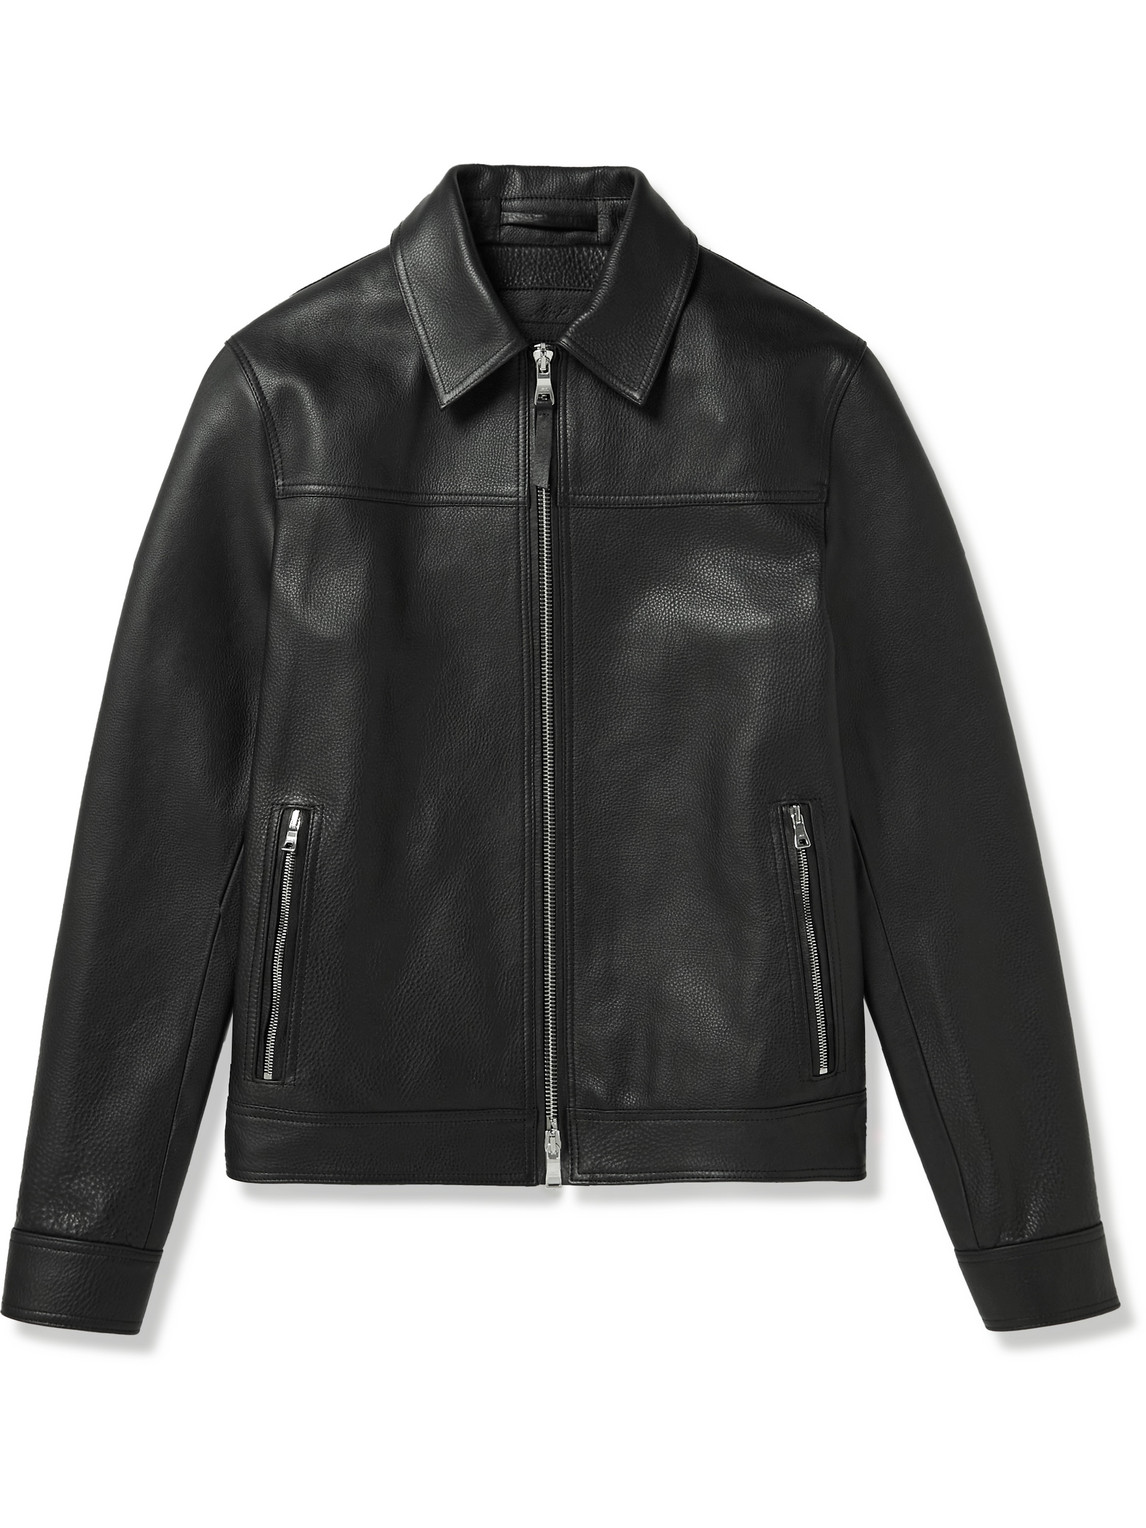 Mr P Full-grain Leather Coach Jacket In Black